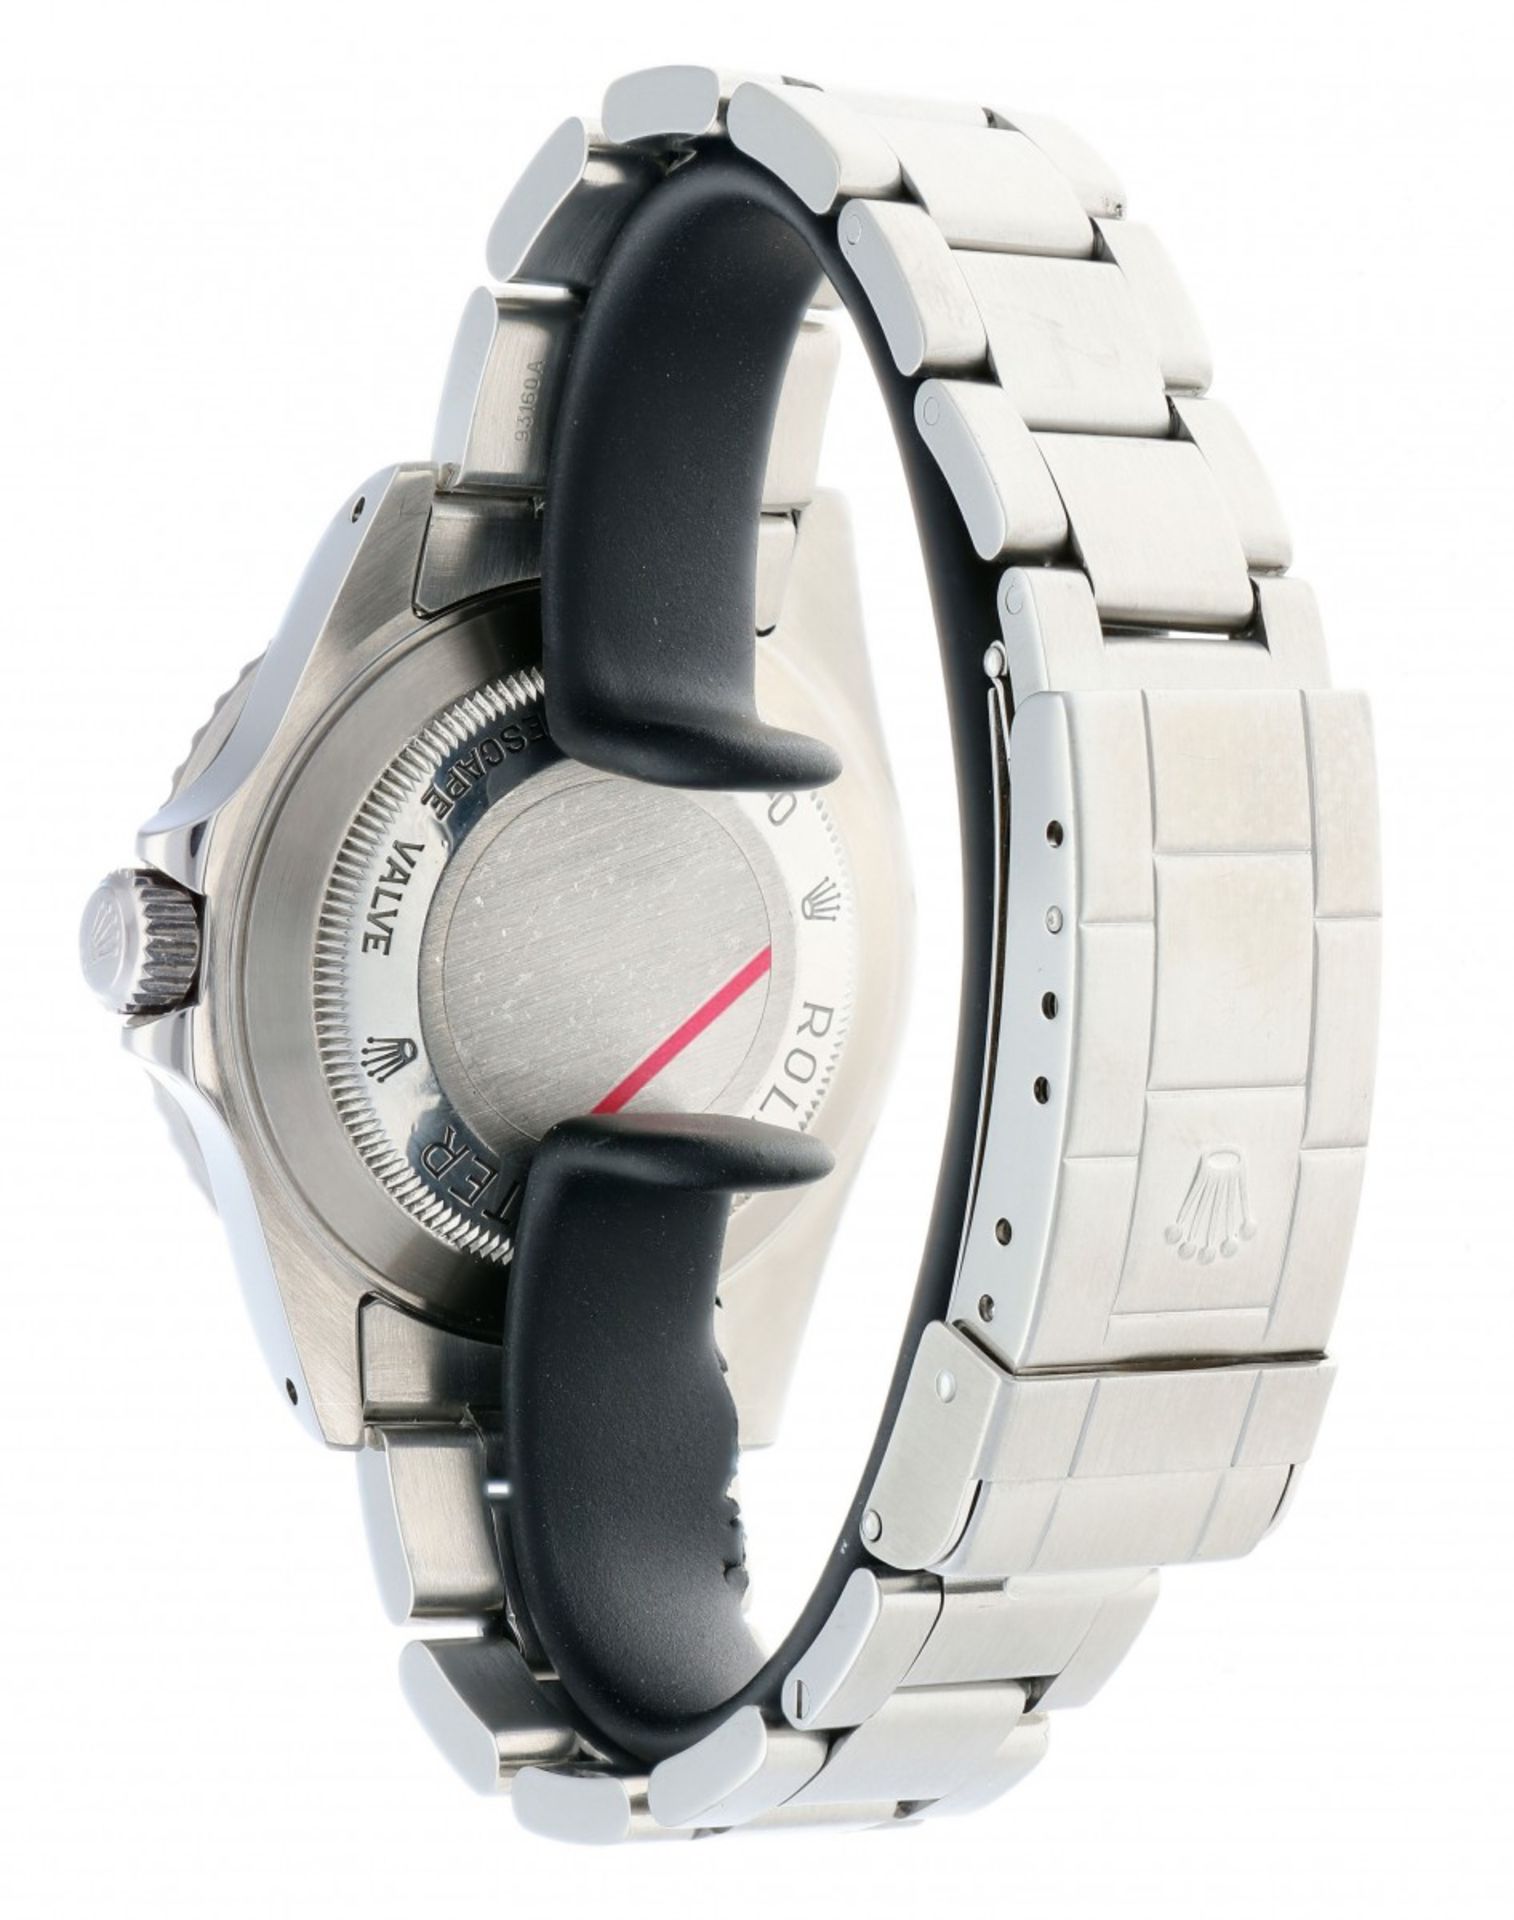 Rolex Sea-Dweller 16600 - Men's watch - Approx. 2001 - Image 3 of 6